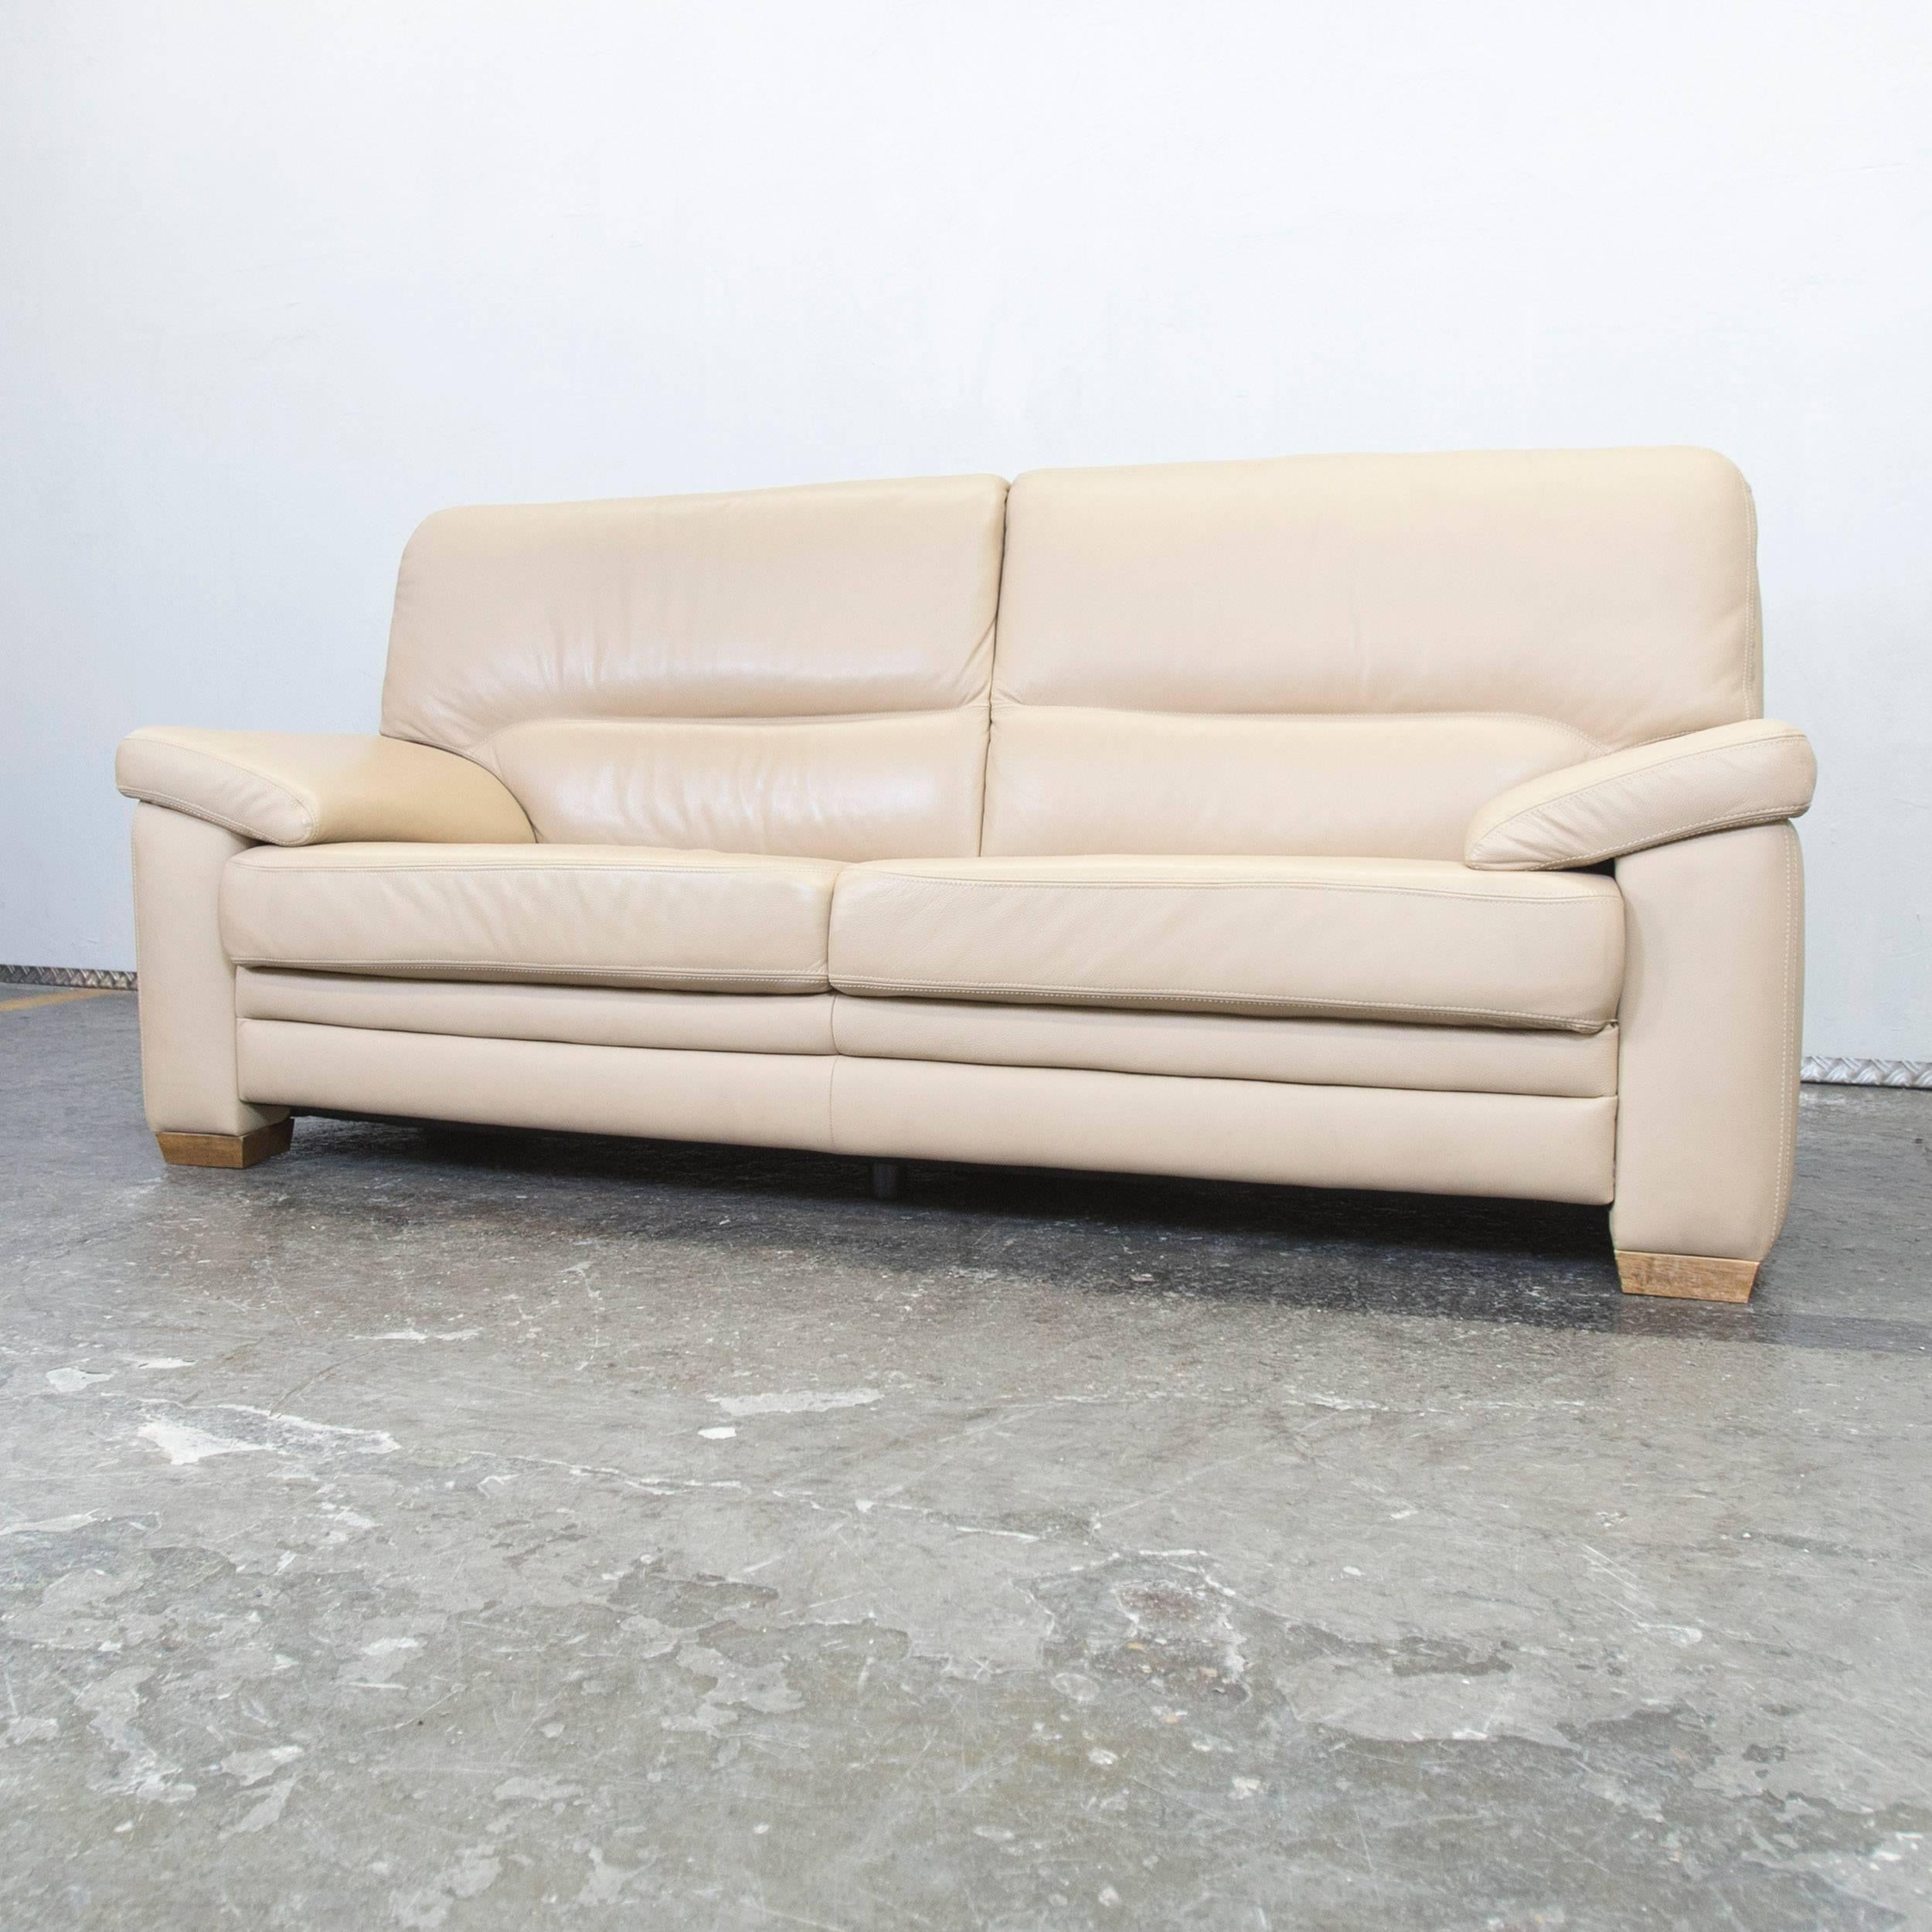 Beige colored designer sofa, with a modern design, designed for pure comfort.